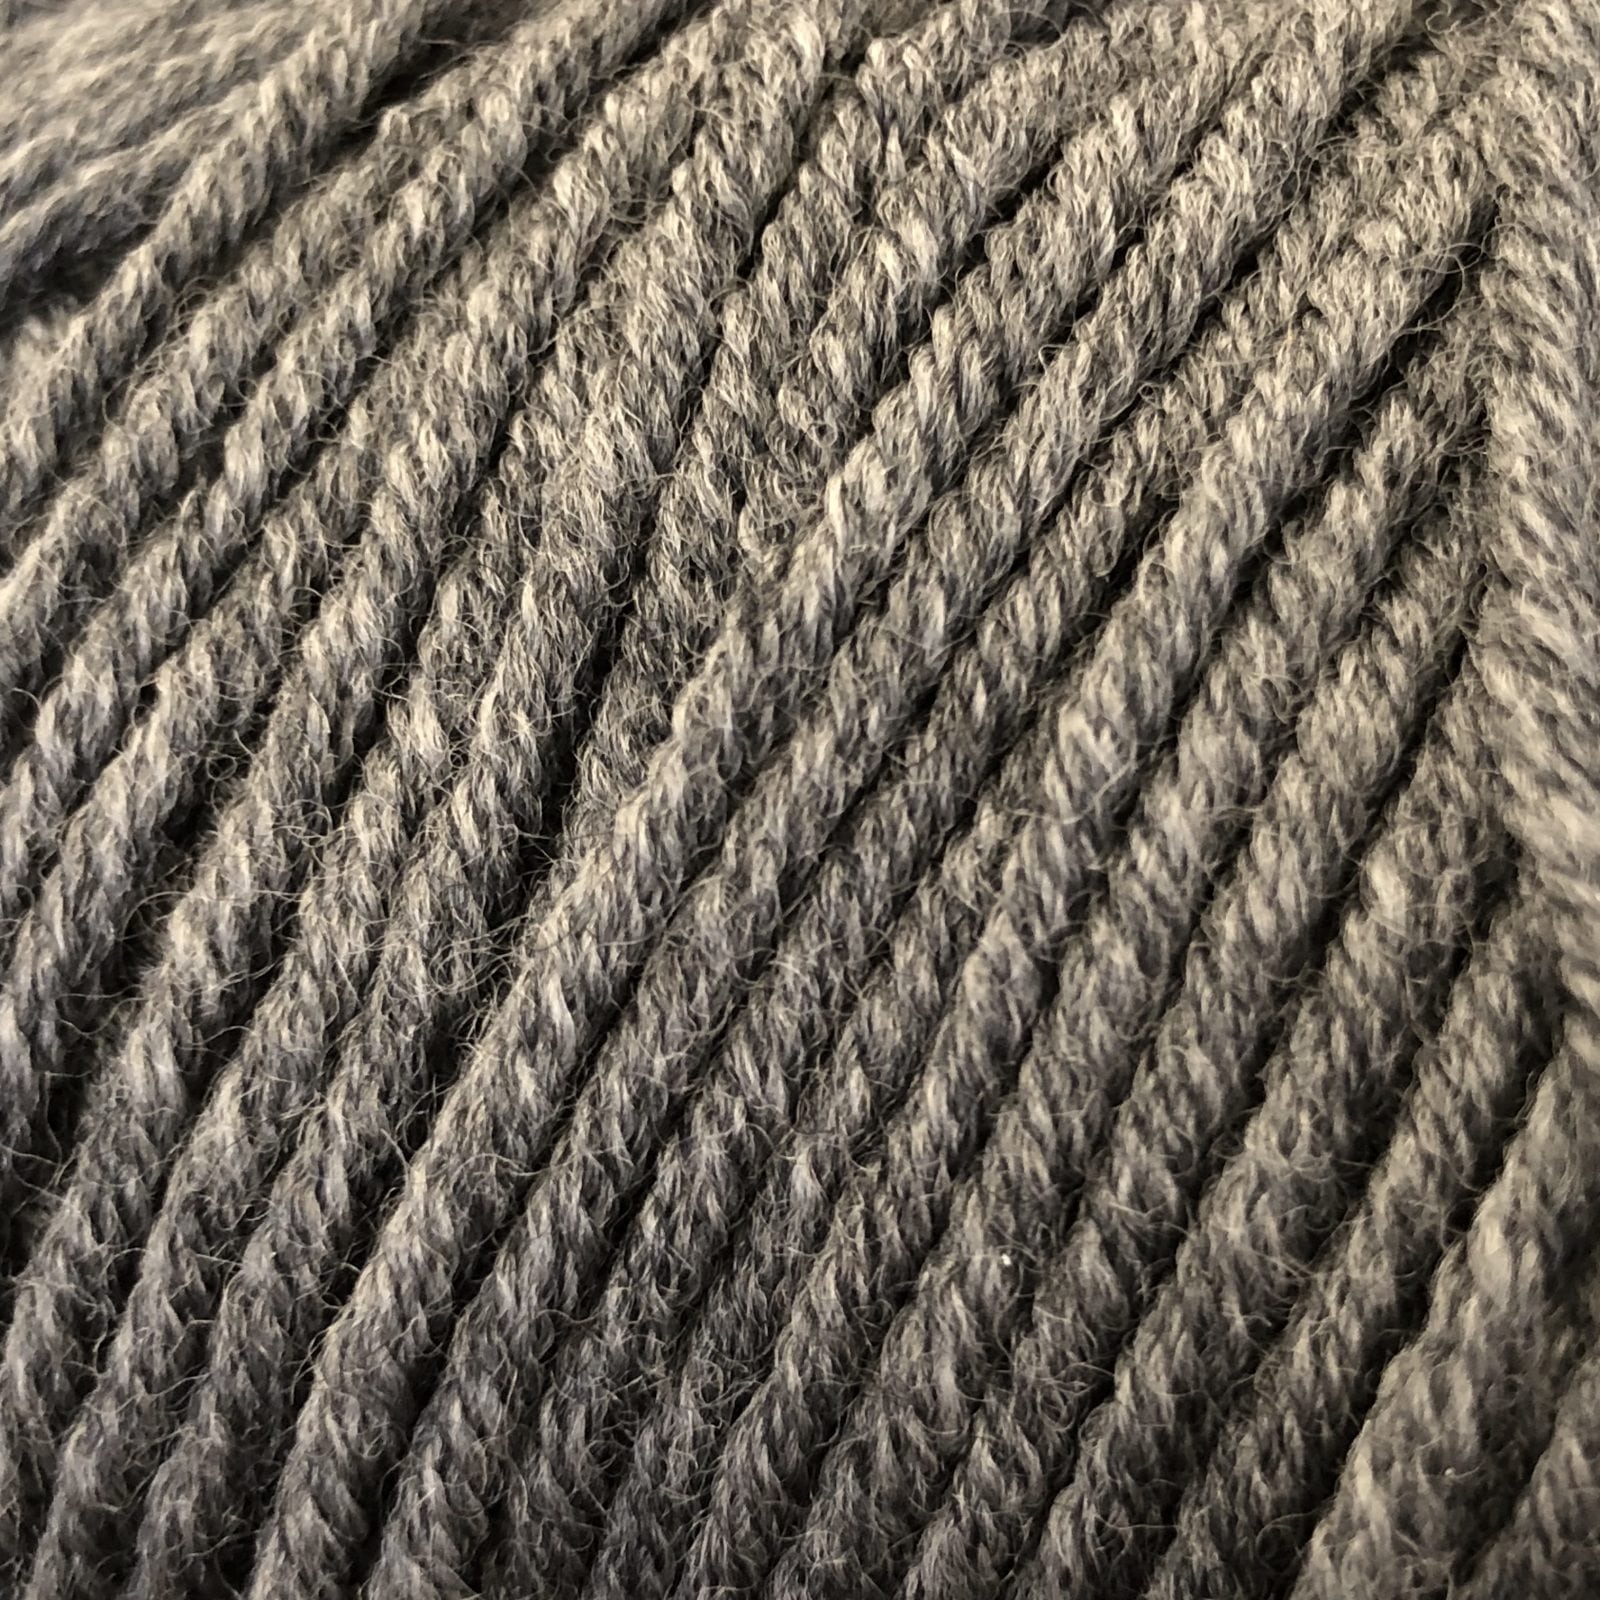 Broadway Yarns Merino 8ply double knit shade 901